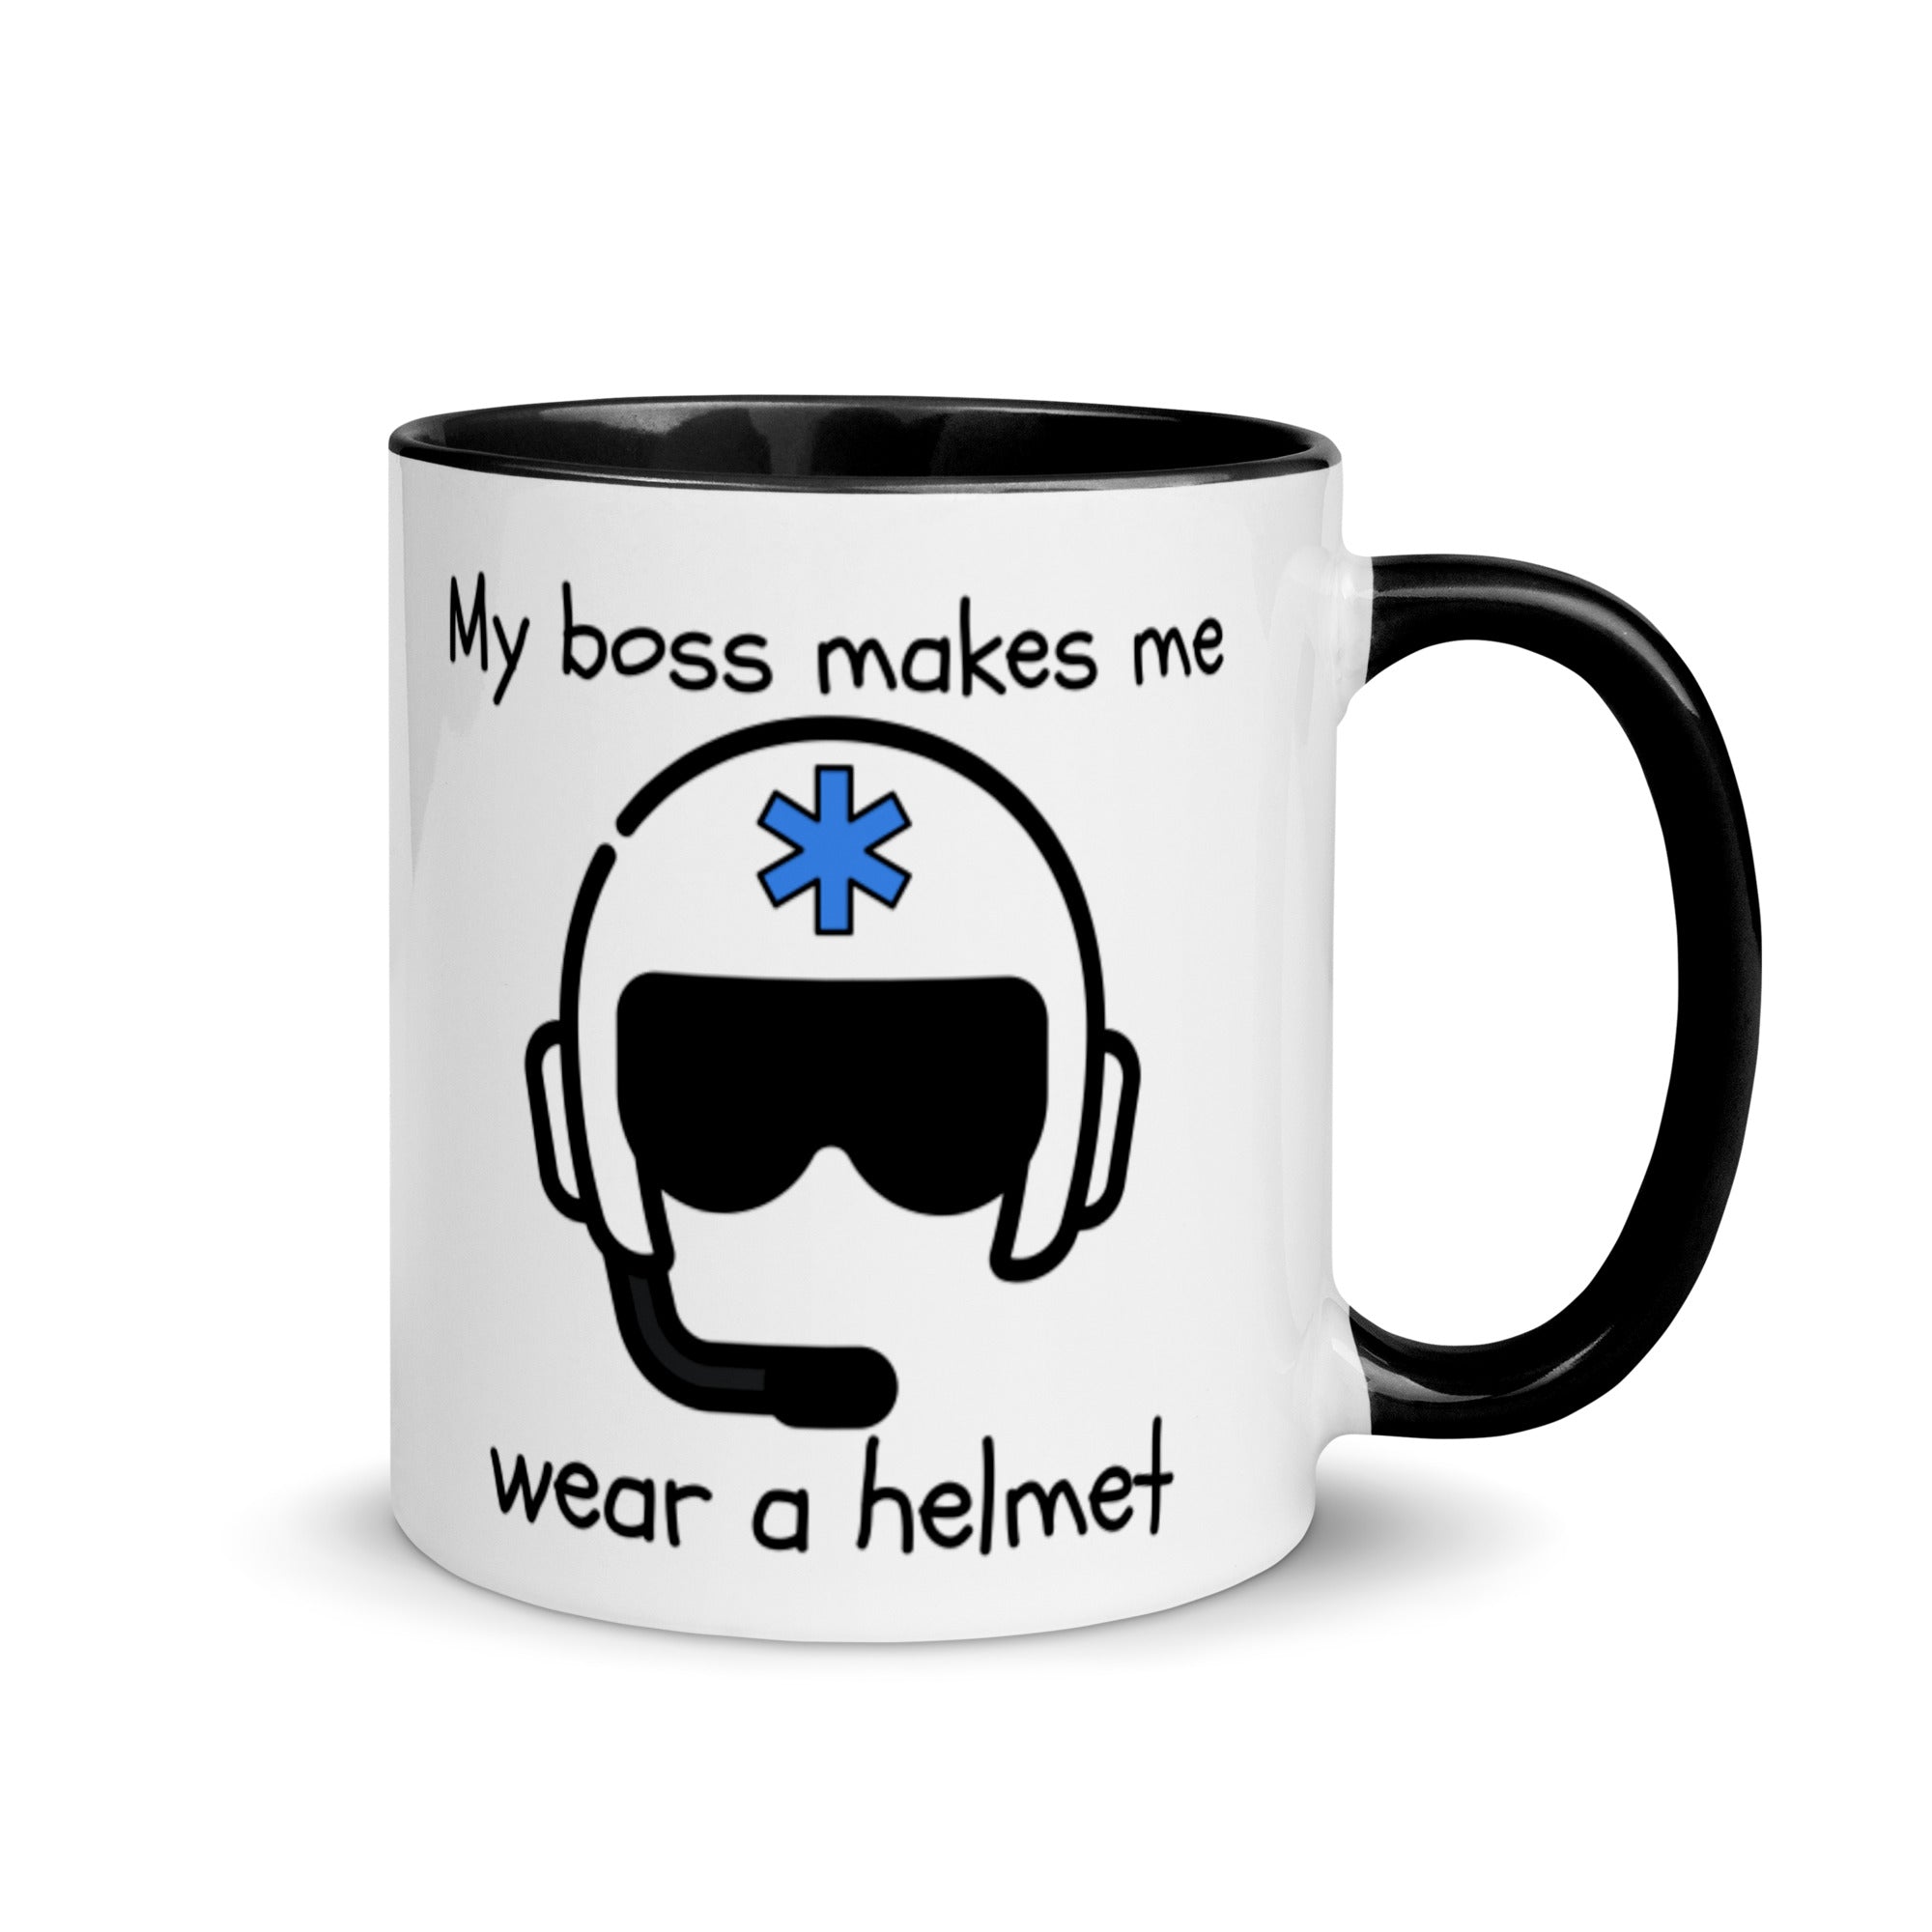 Boss Fuel (Black Glossy Mug)